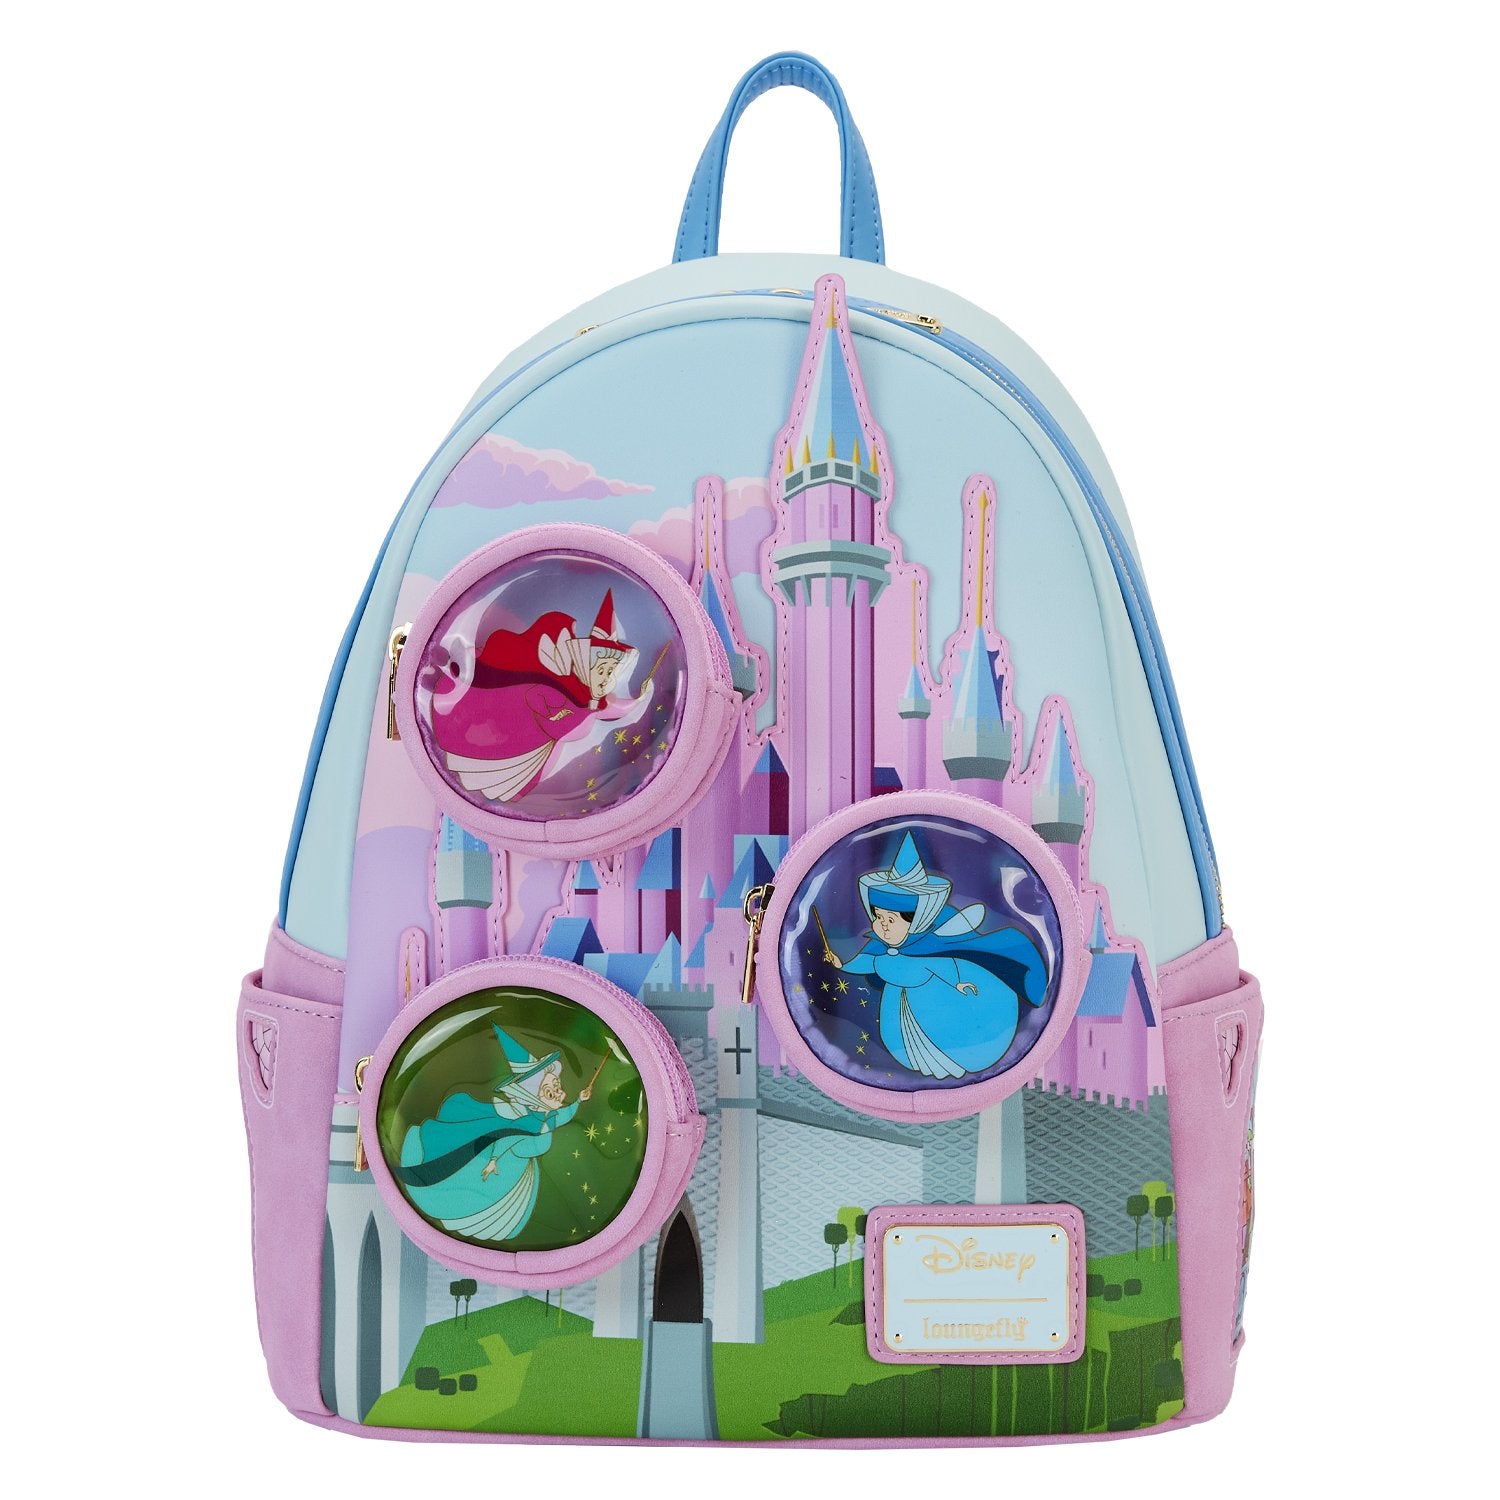 Loungefly Disney Sleeping Beauty Forest Dancing Mini Backpack princess  Aurora